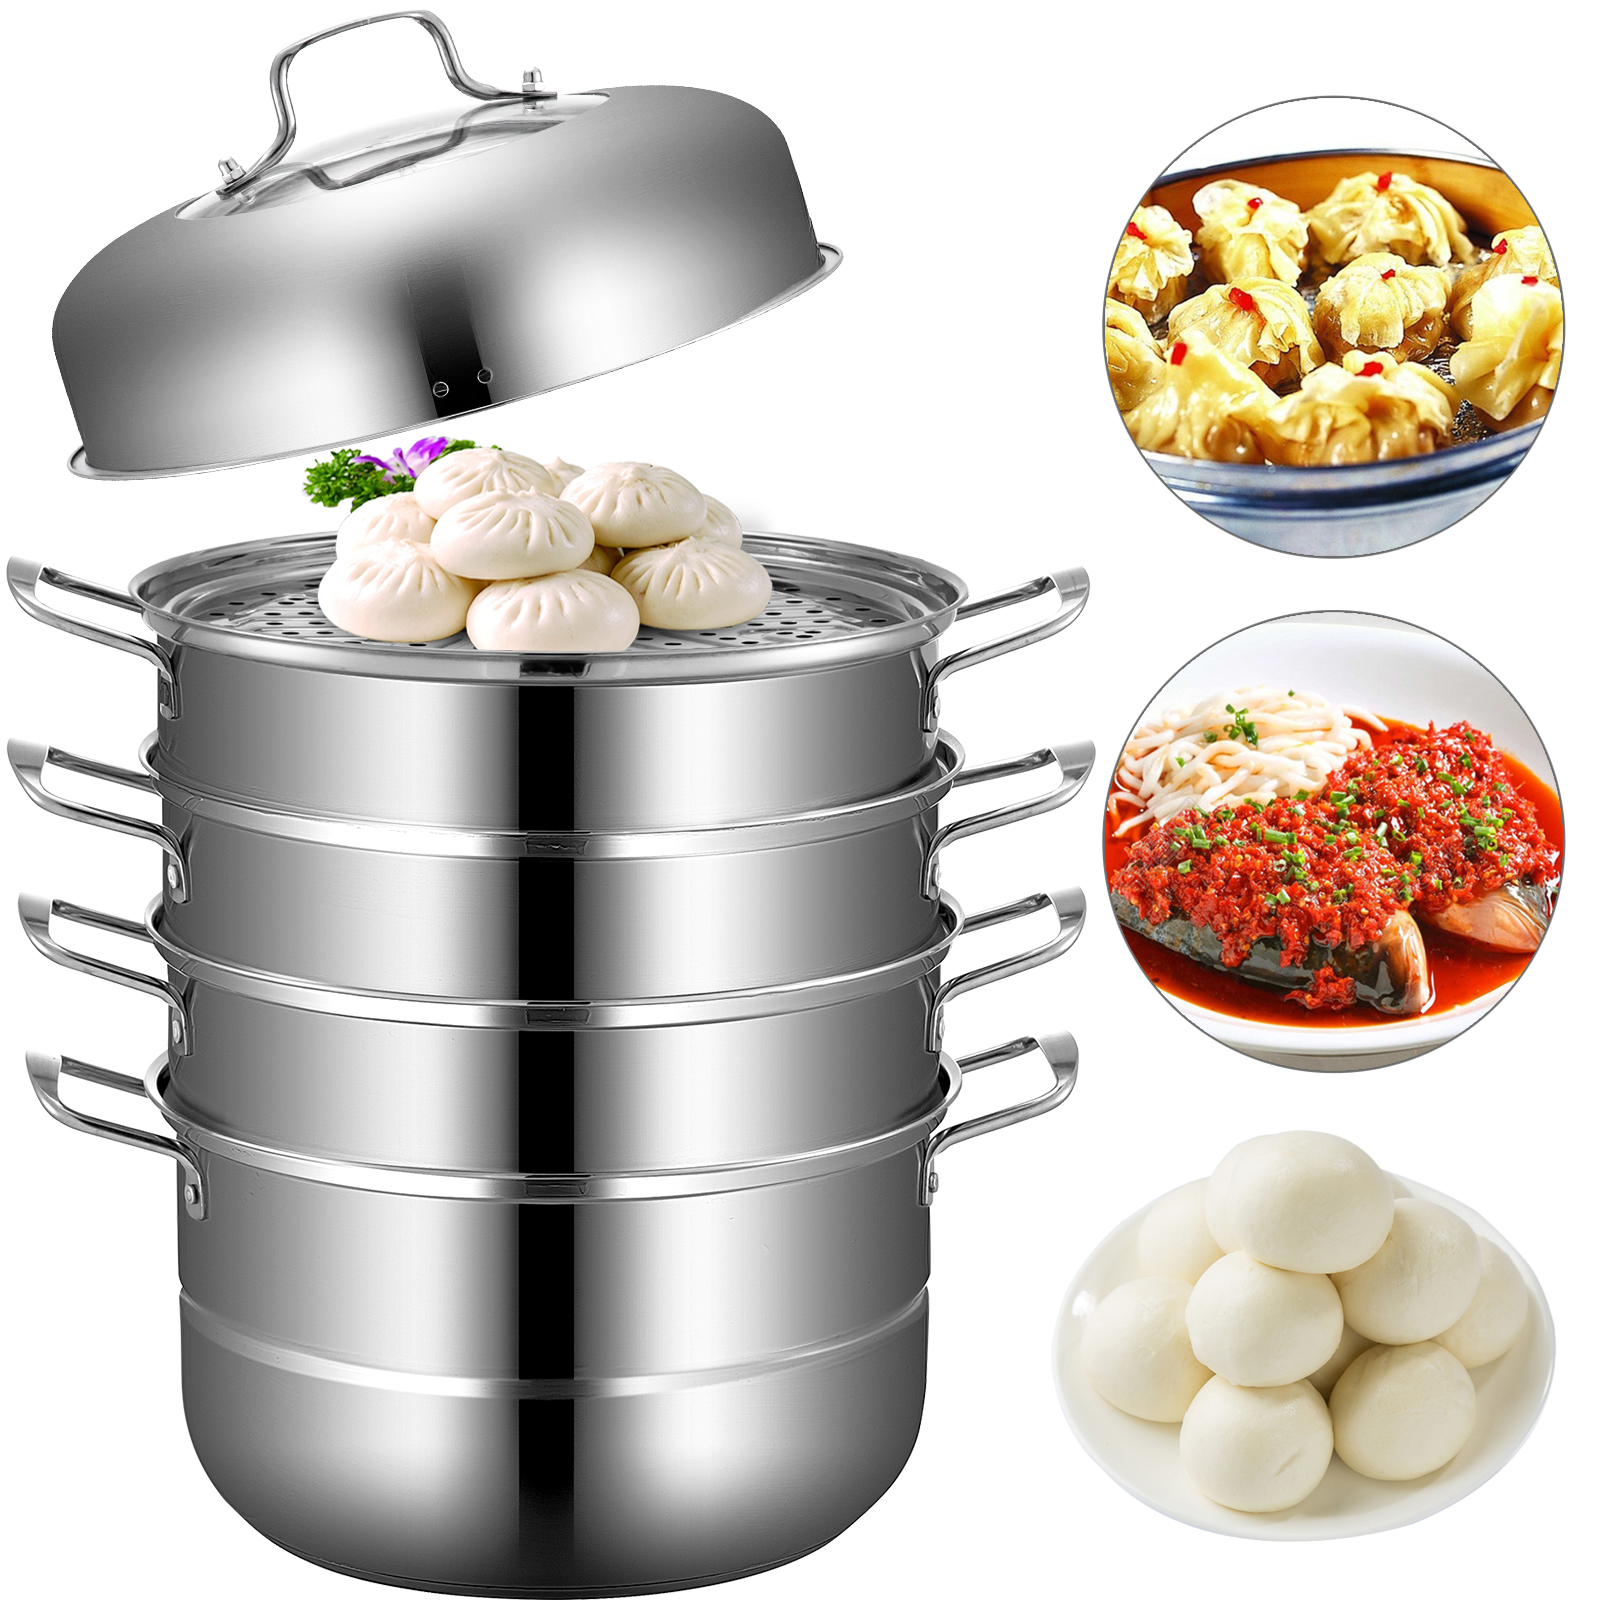 VEVOR 5 Layer Food Steamer 28cm 30cm Stainless Steel Stock Pot for Home Steaming Dumplings Vegetables Rice Cooking Steamed Dish